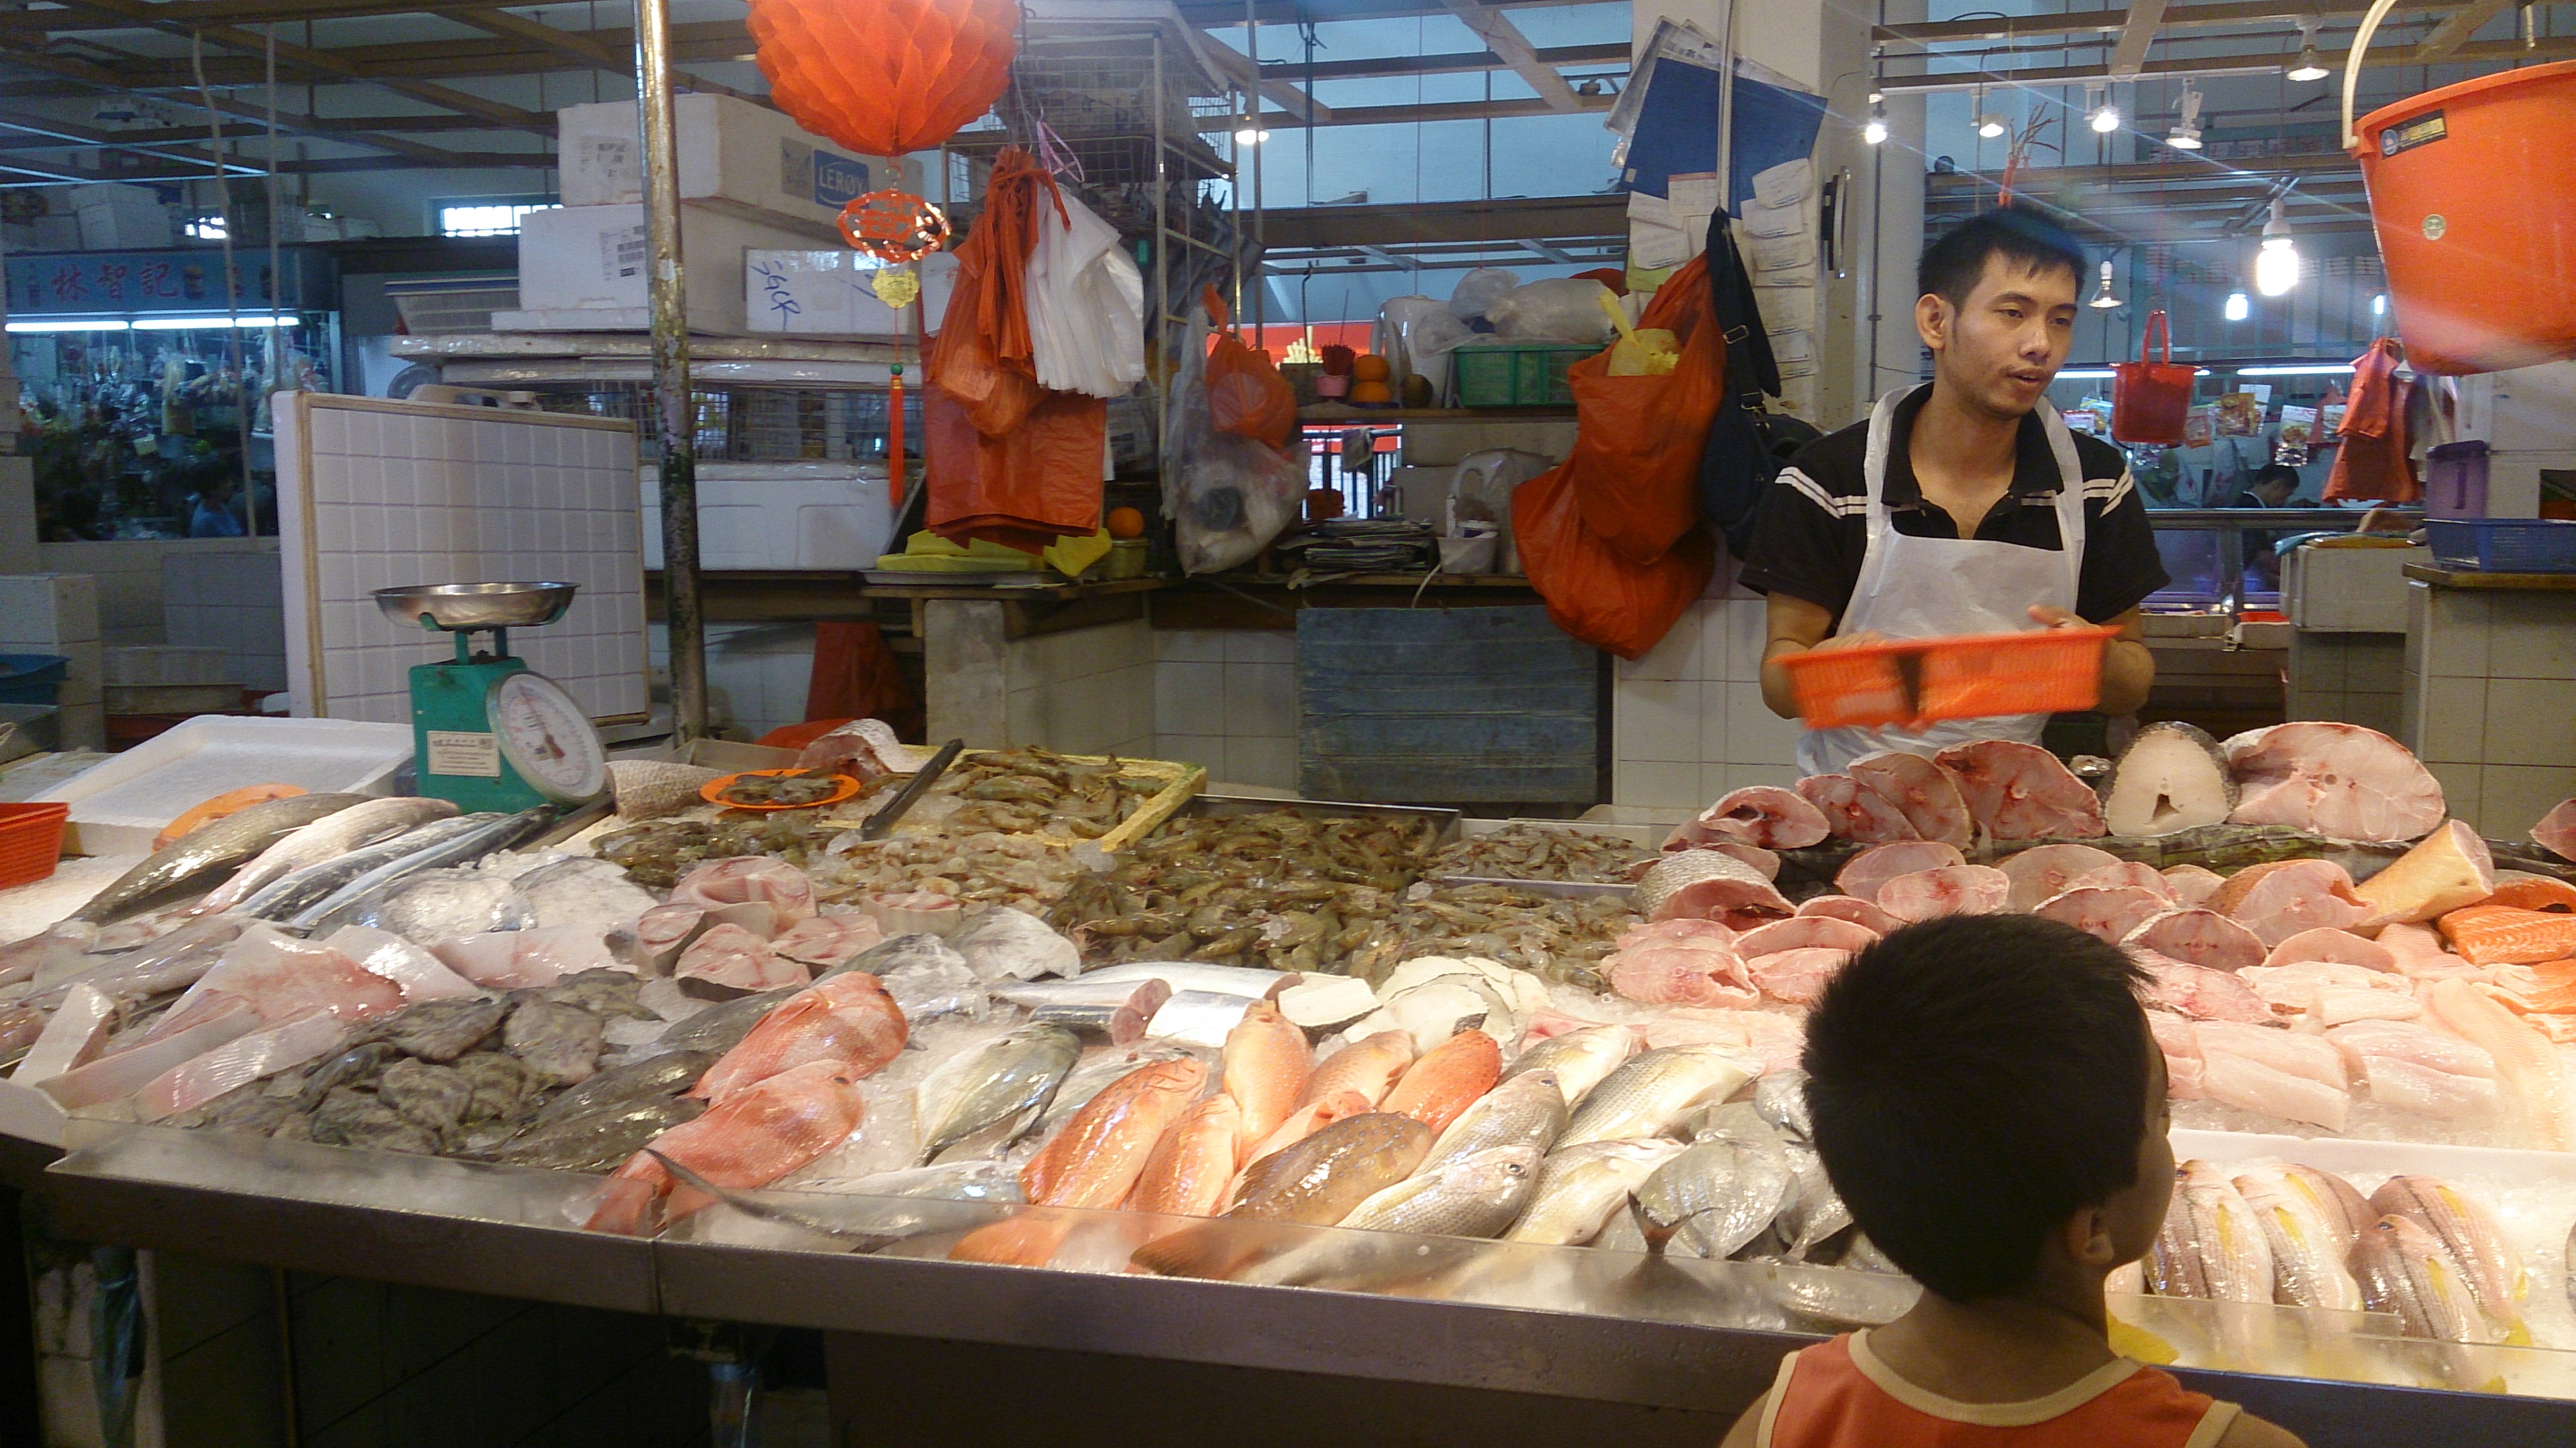 File:Fish stall at wet market, Singapore.jpg - Wikimedia Commons